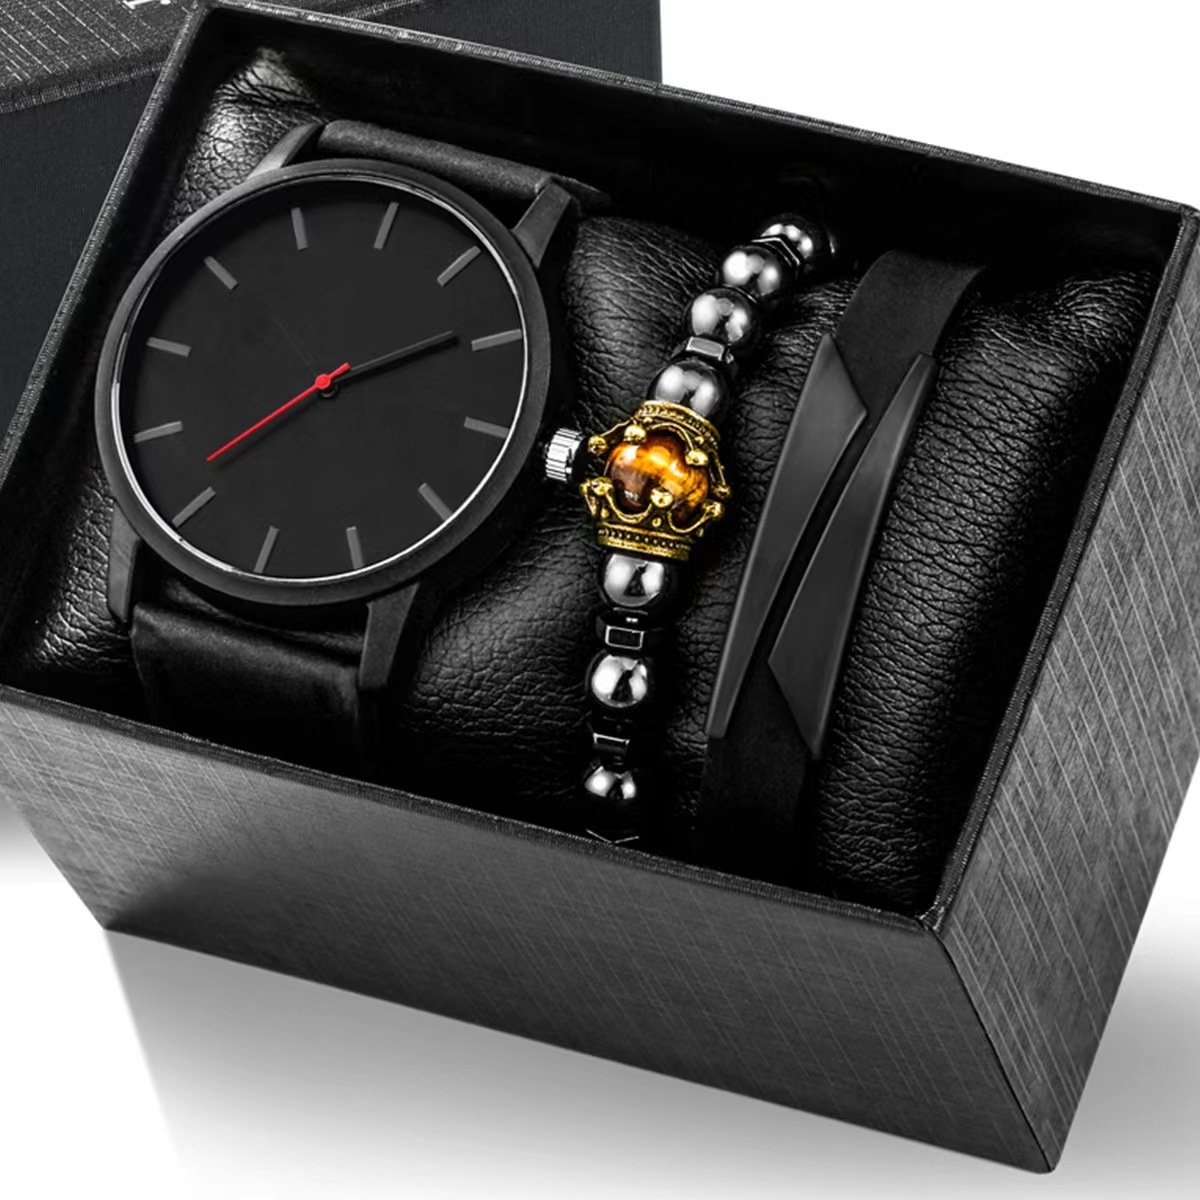 9:5 watch, bracelet and box